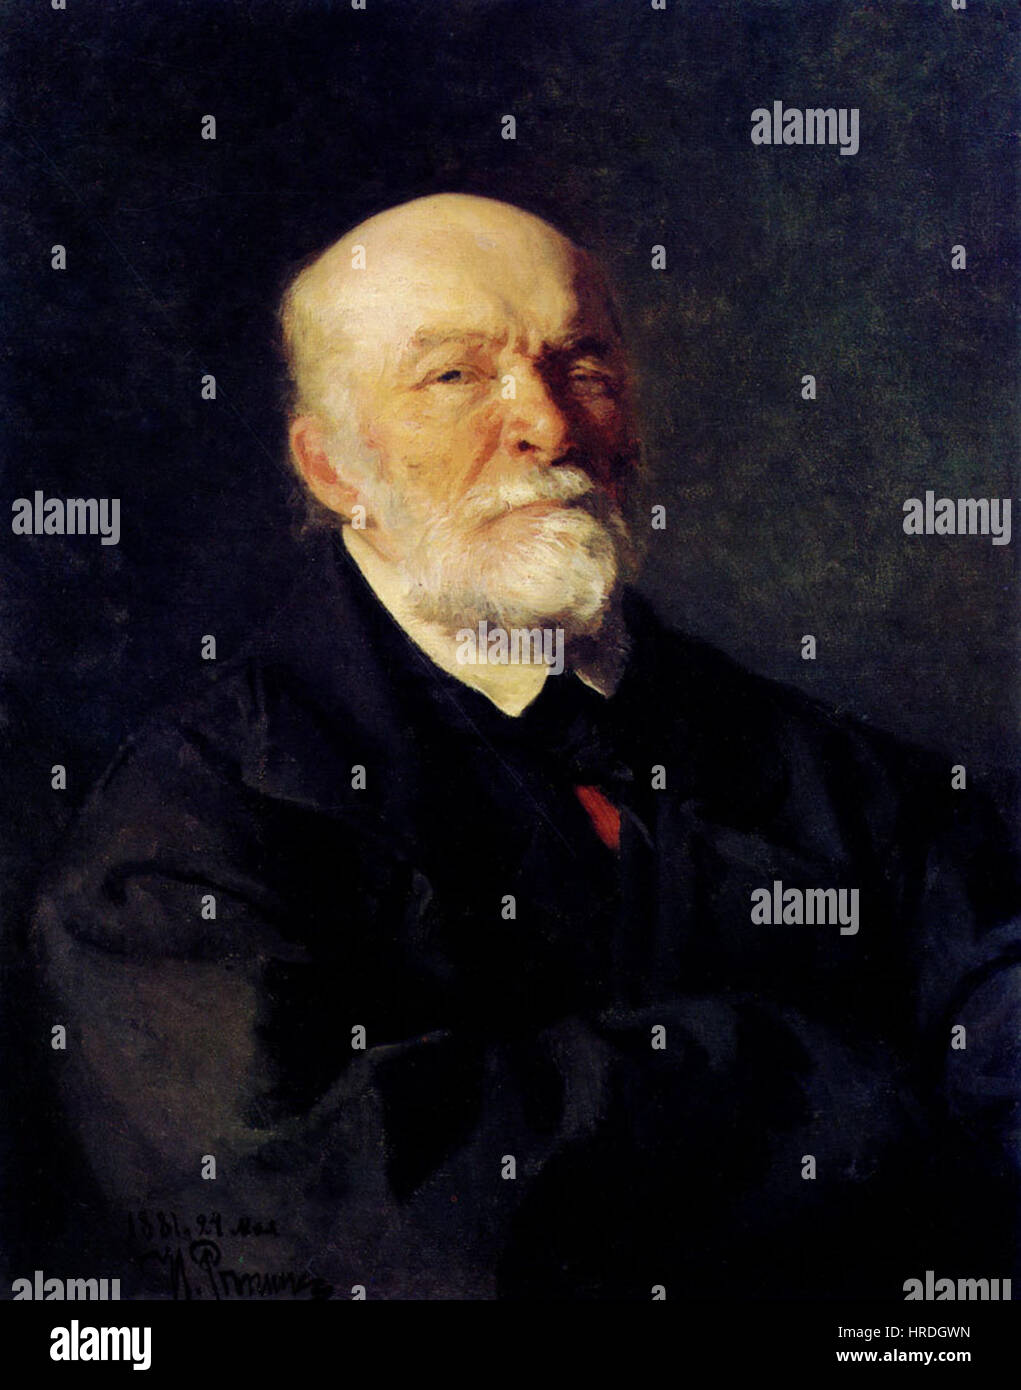 Ilya Repin Portrait of the Surgeon Nikolay Pirogov 1881 Stock Photo